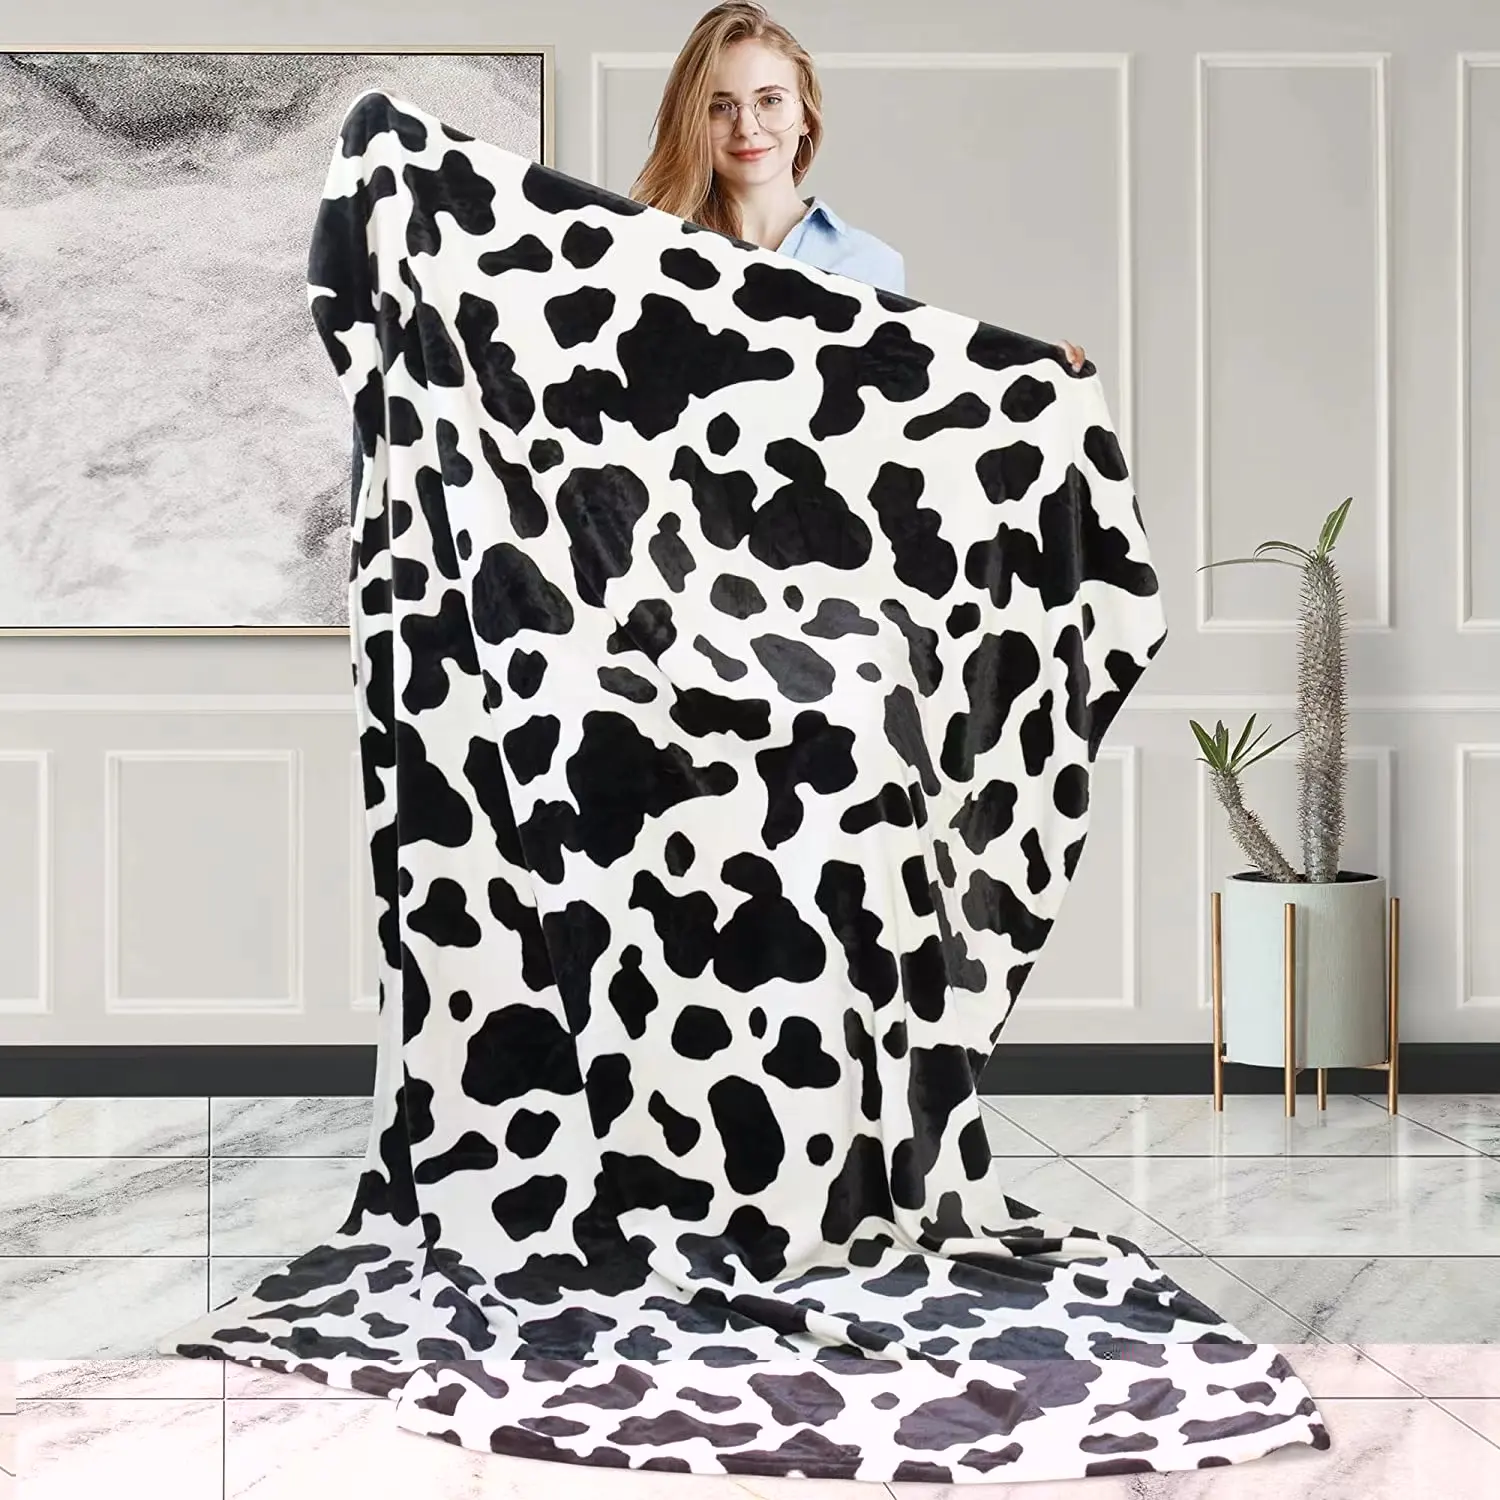 Wholesale leopard print cow pattern throw blanket super soft flannel fleece blanket custom print for winter